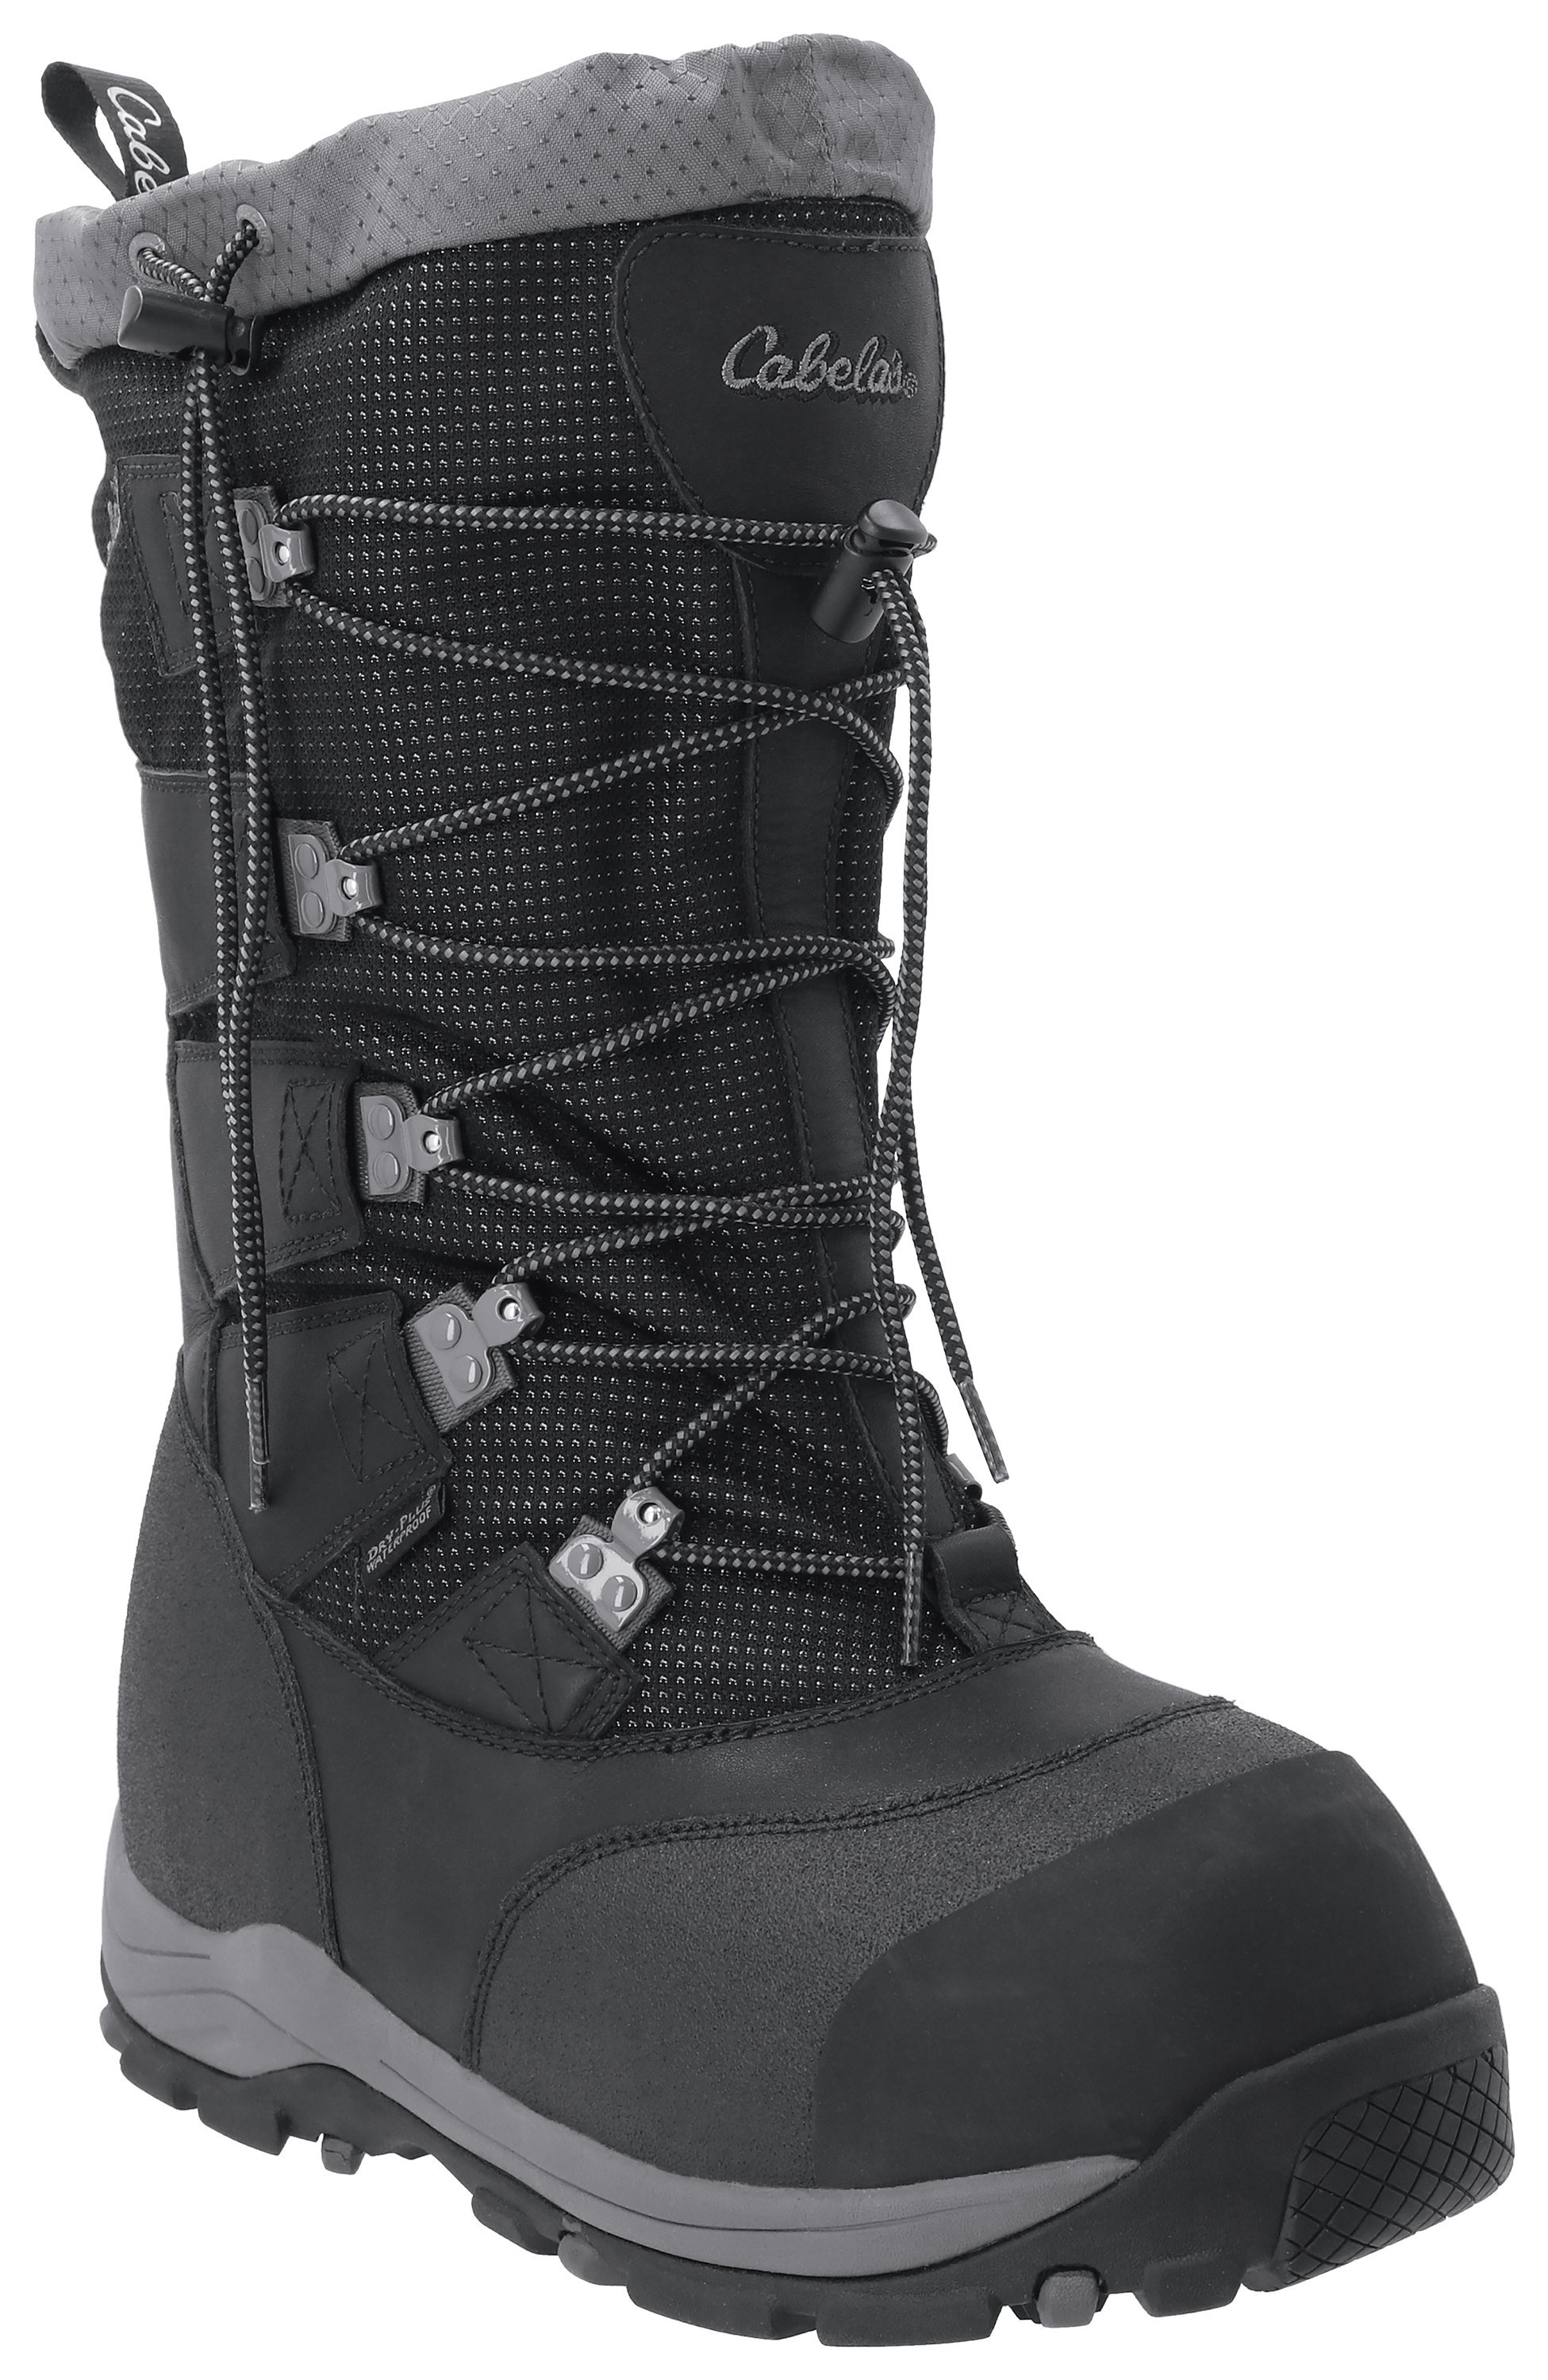 Cabela's Trans-Alaska Insulated Waterproof Pac Boots for Men